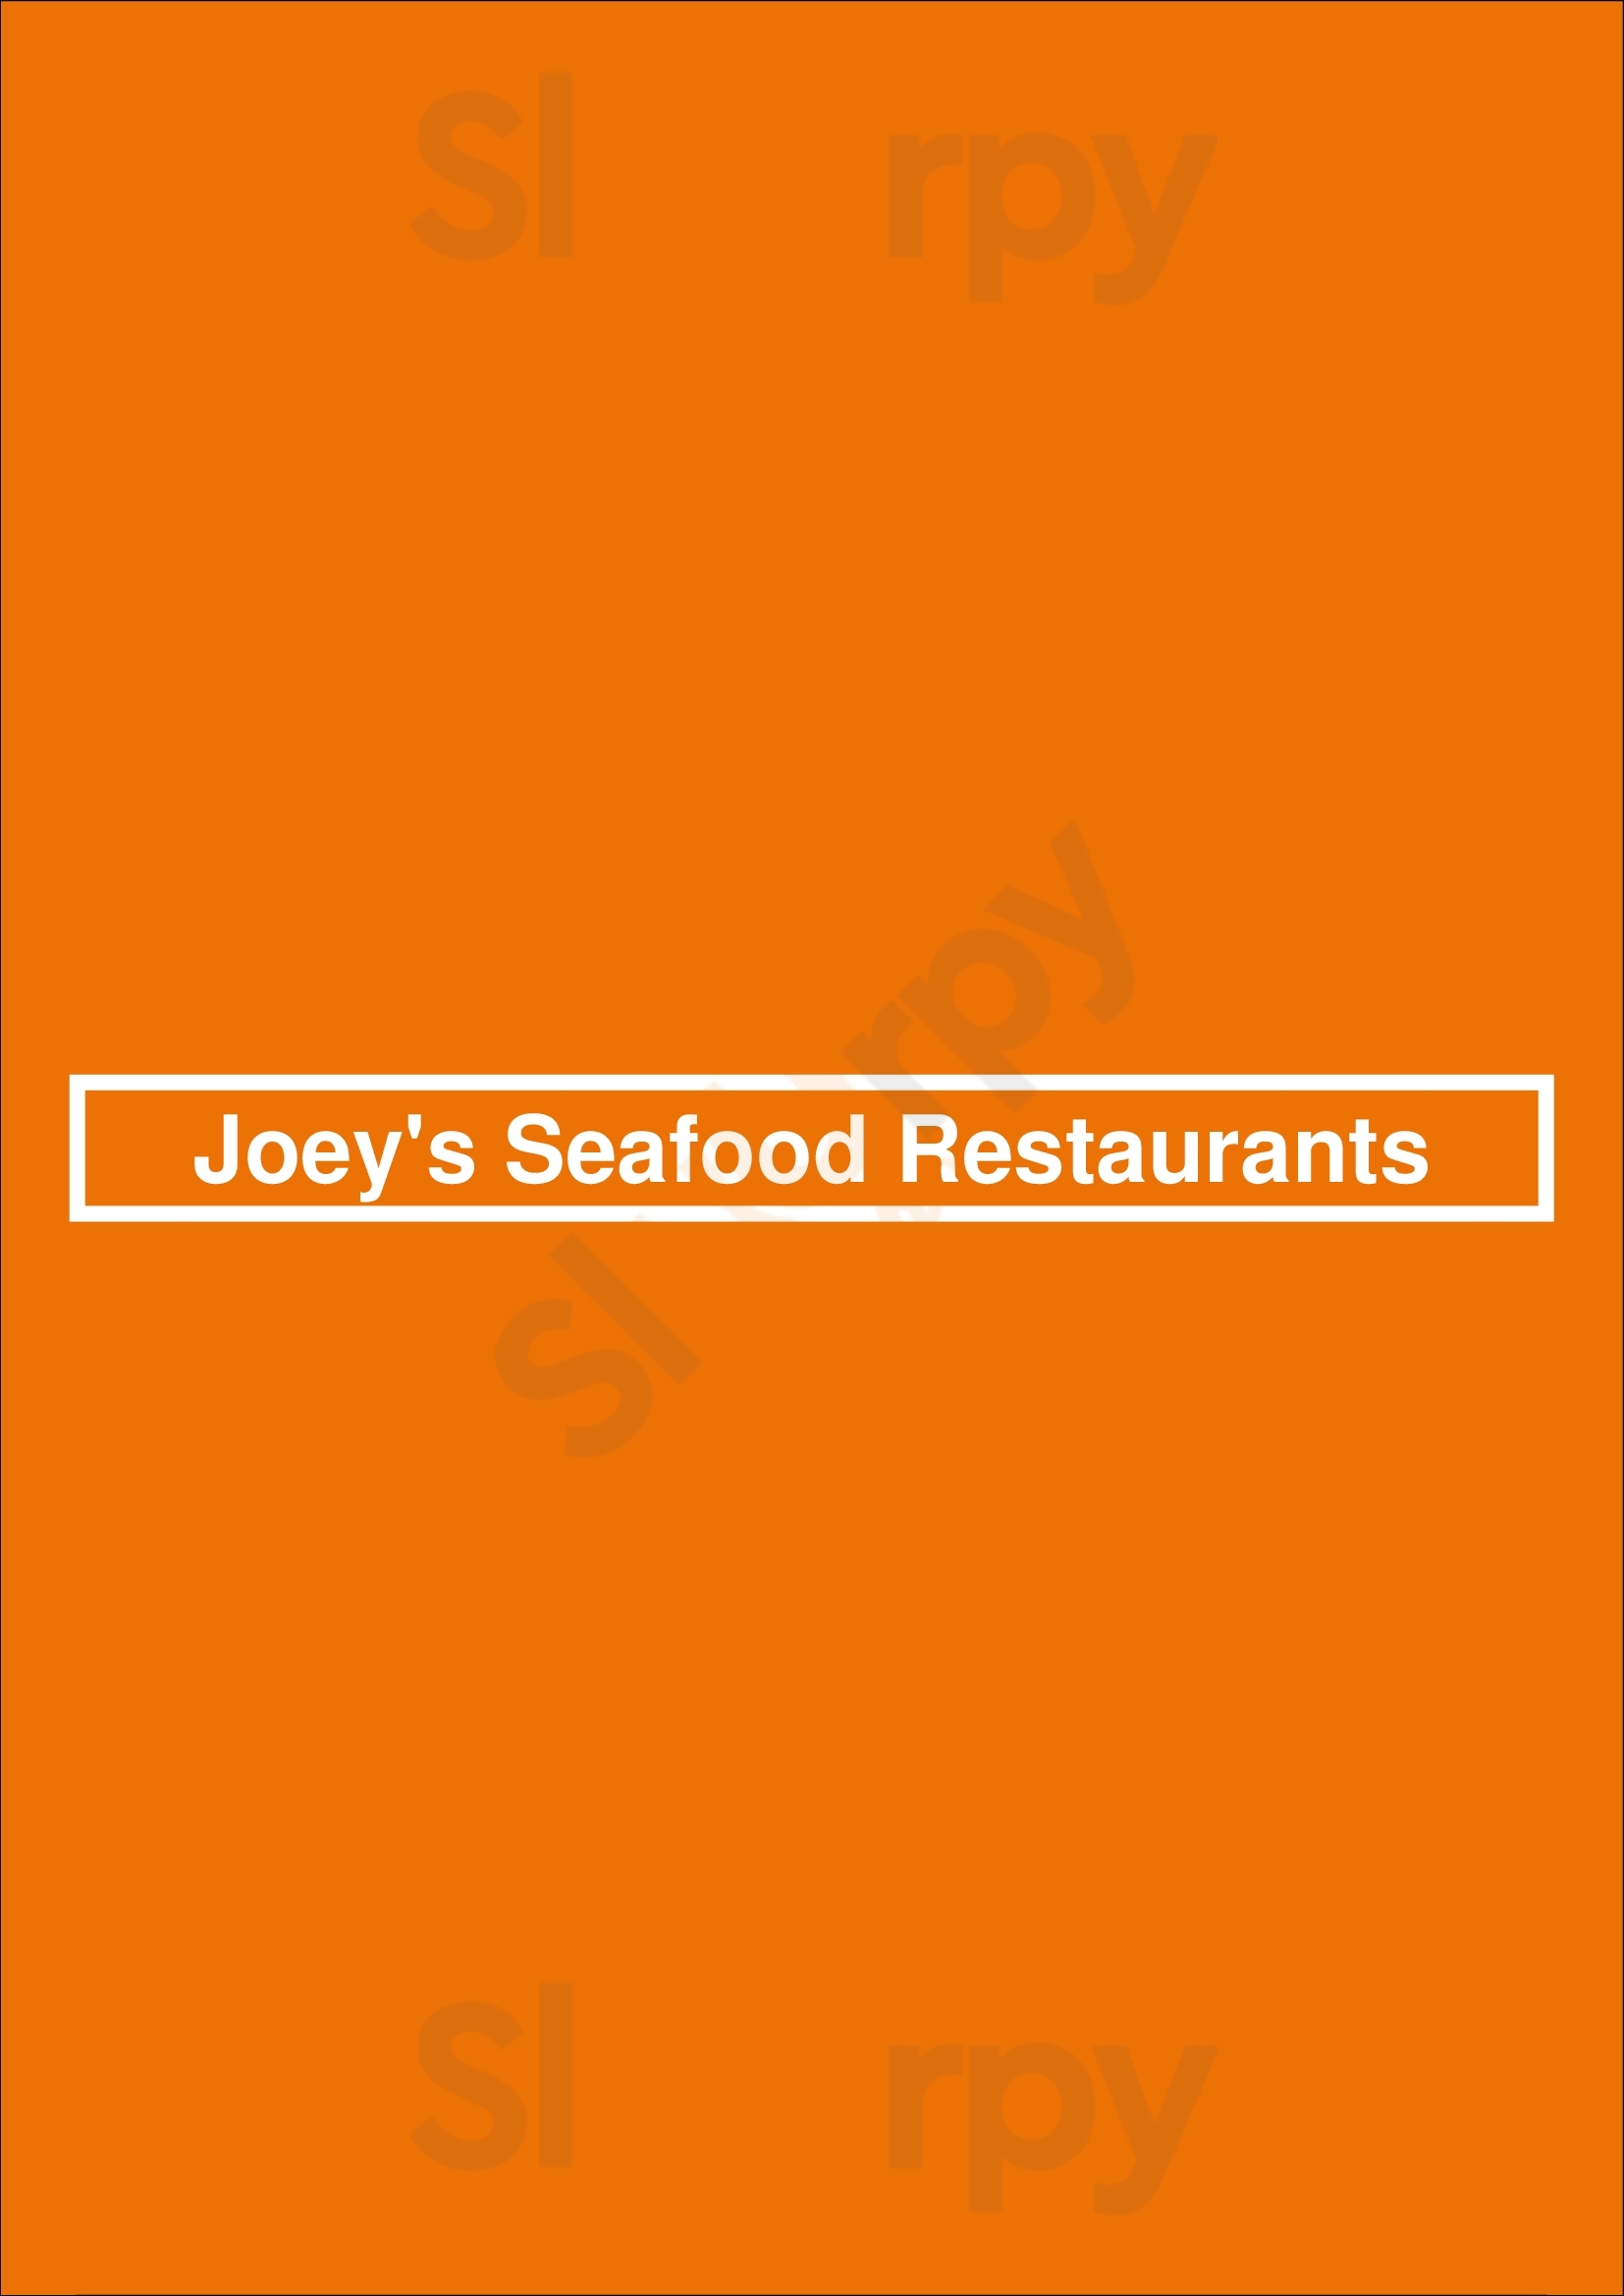 Joey's Seafood Restaurants Winnipeg Menu - 1